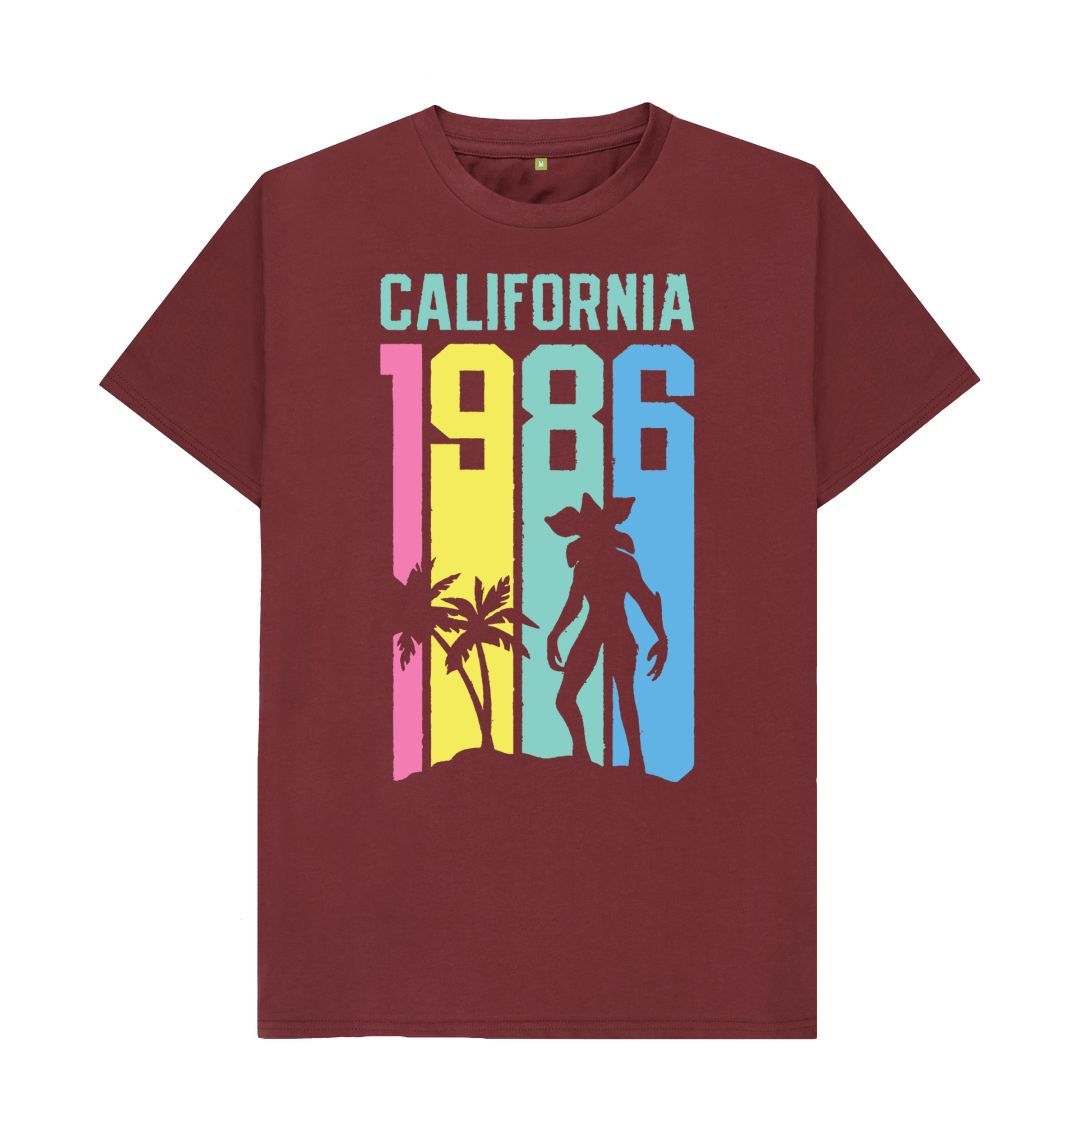 Red Wine Stranger Things California 1986 Cotton T-Shirt